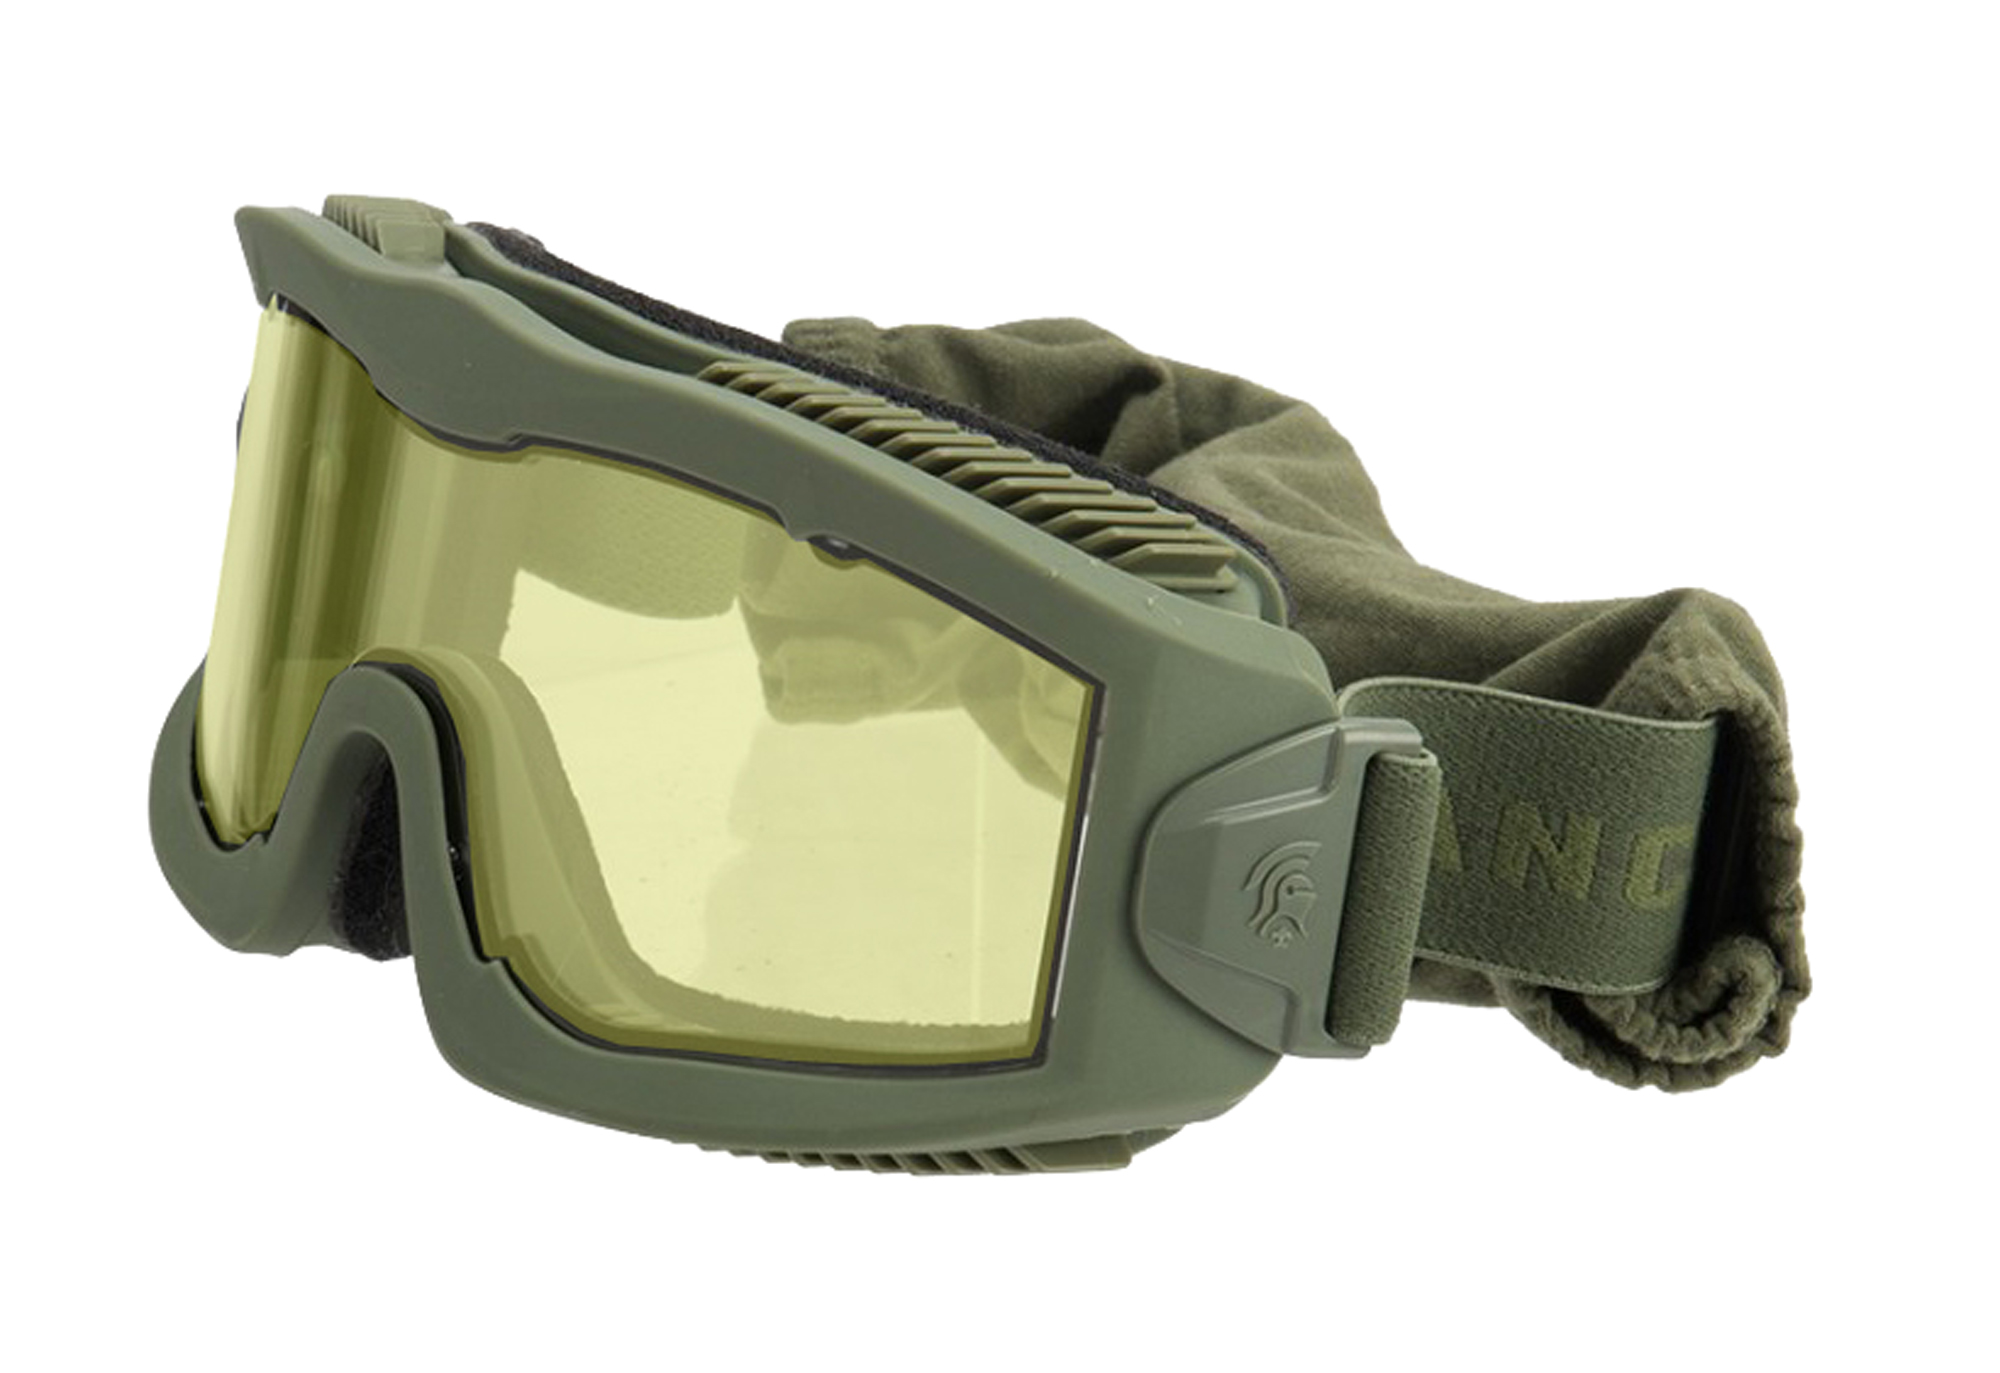 Masque série AERO Thermal OD - Lancer Tactical